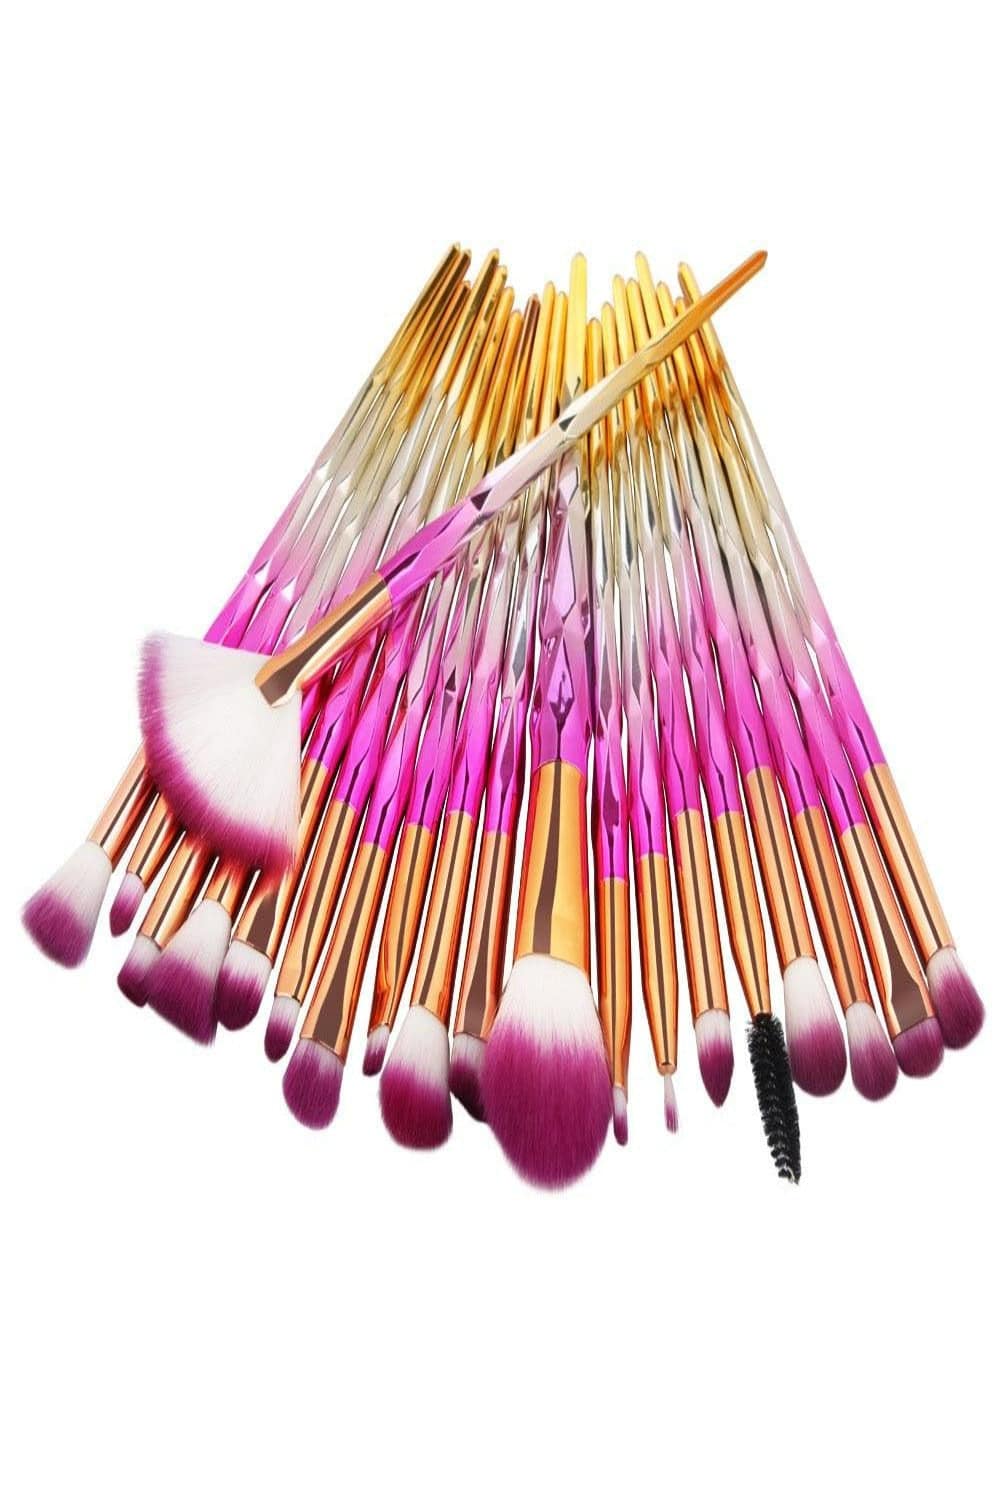 Coral Pink Vegan Nano Wool Fiber Makeup Brush Set - 15 Pcs